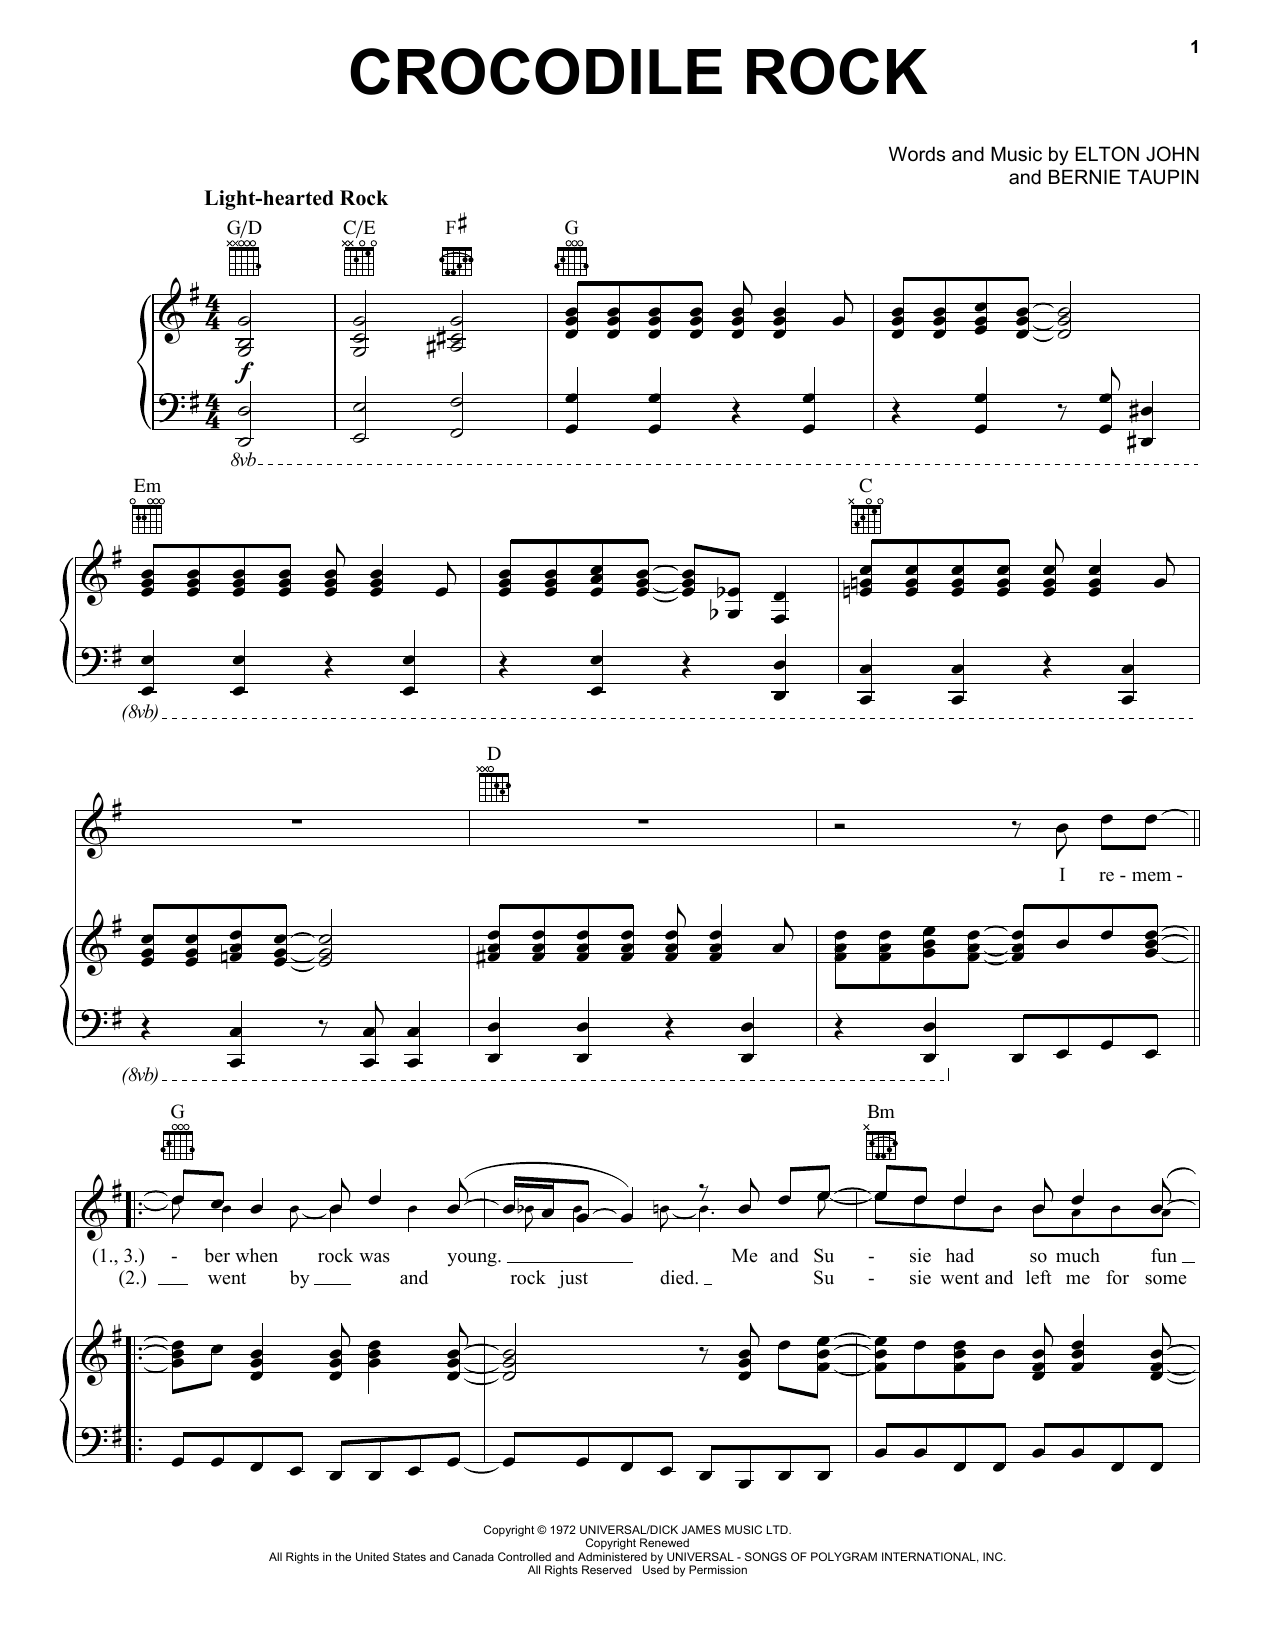 Elton John Crocodile Rock Sheet Music Notes & Chords for Flute - Download or Print PDF